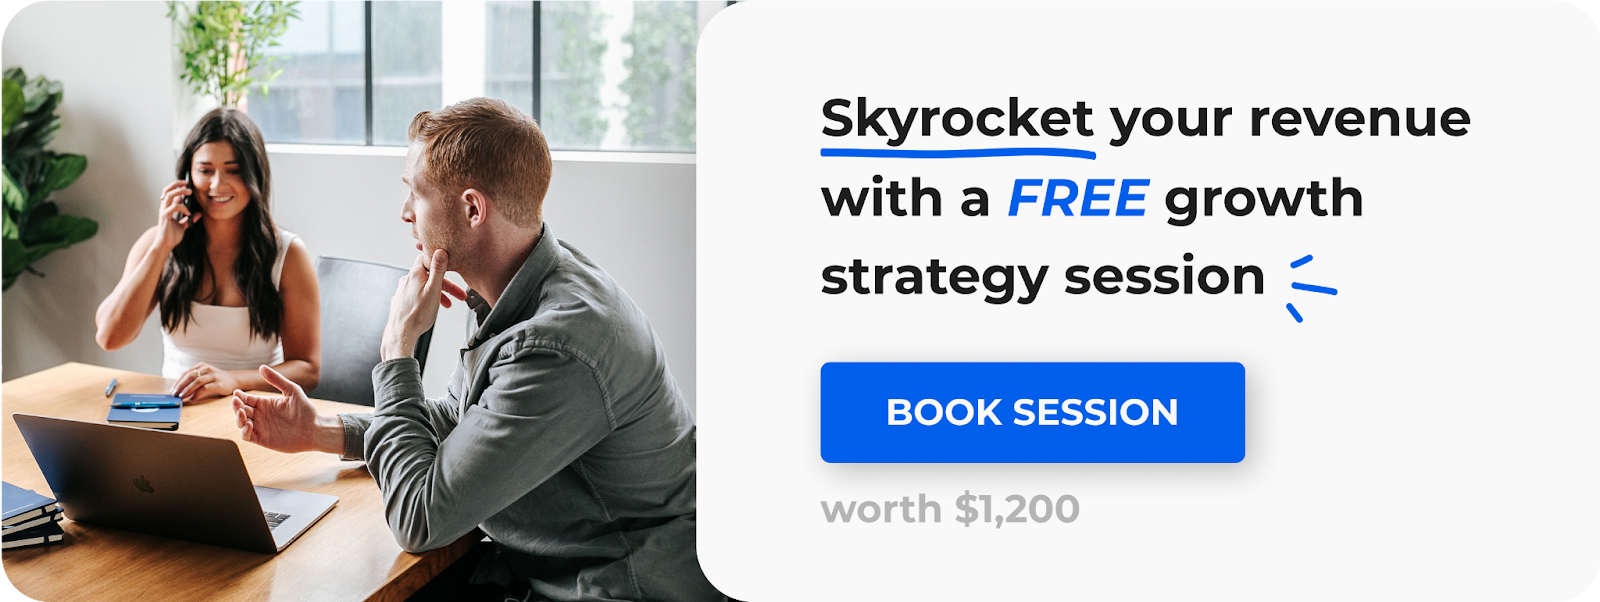 4 Marketing Targeting Strategies to Skyrocket Your Business 9